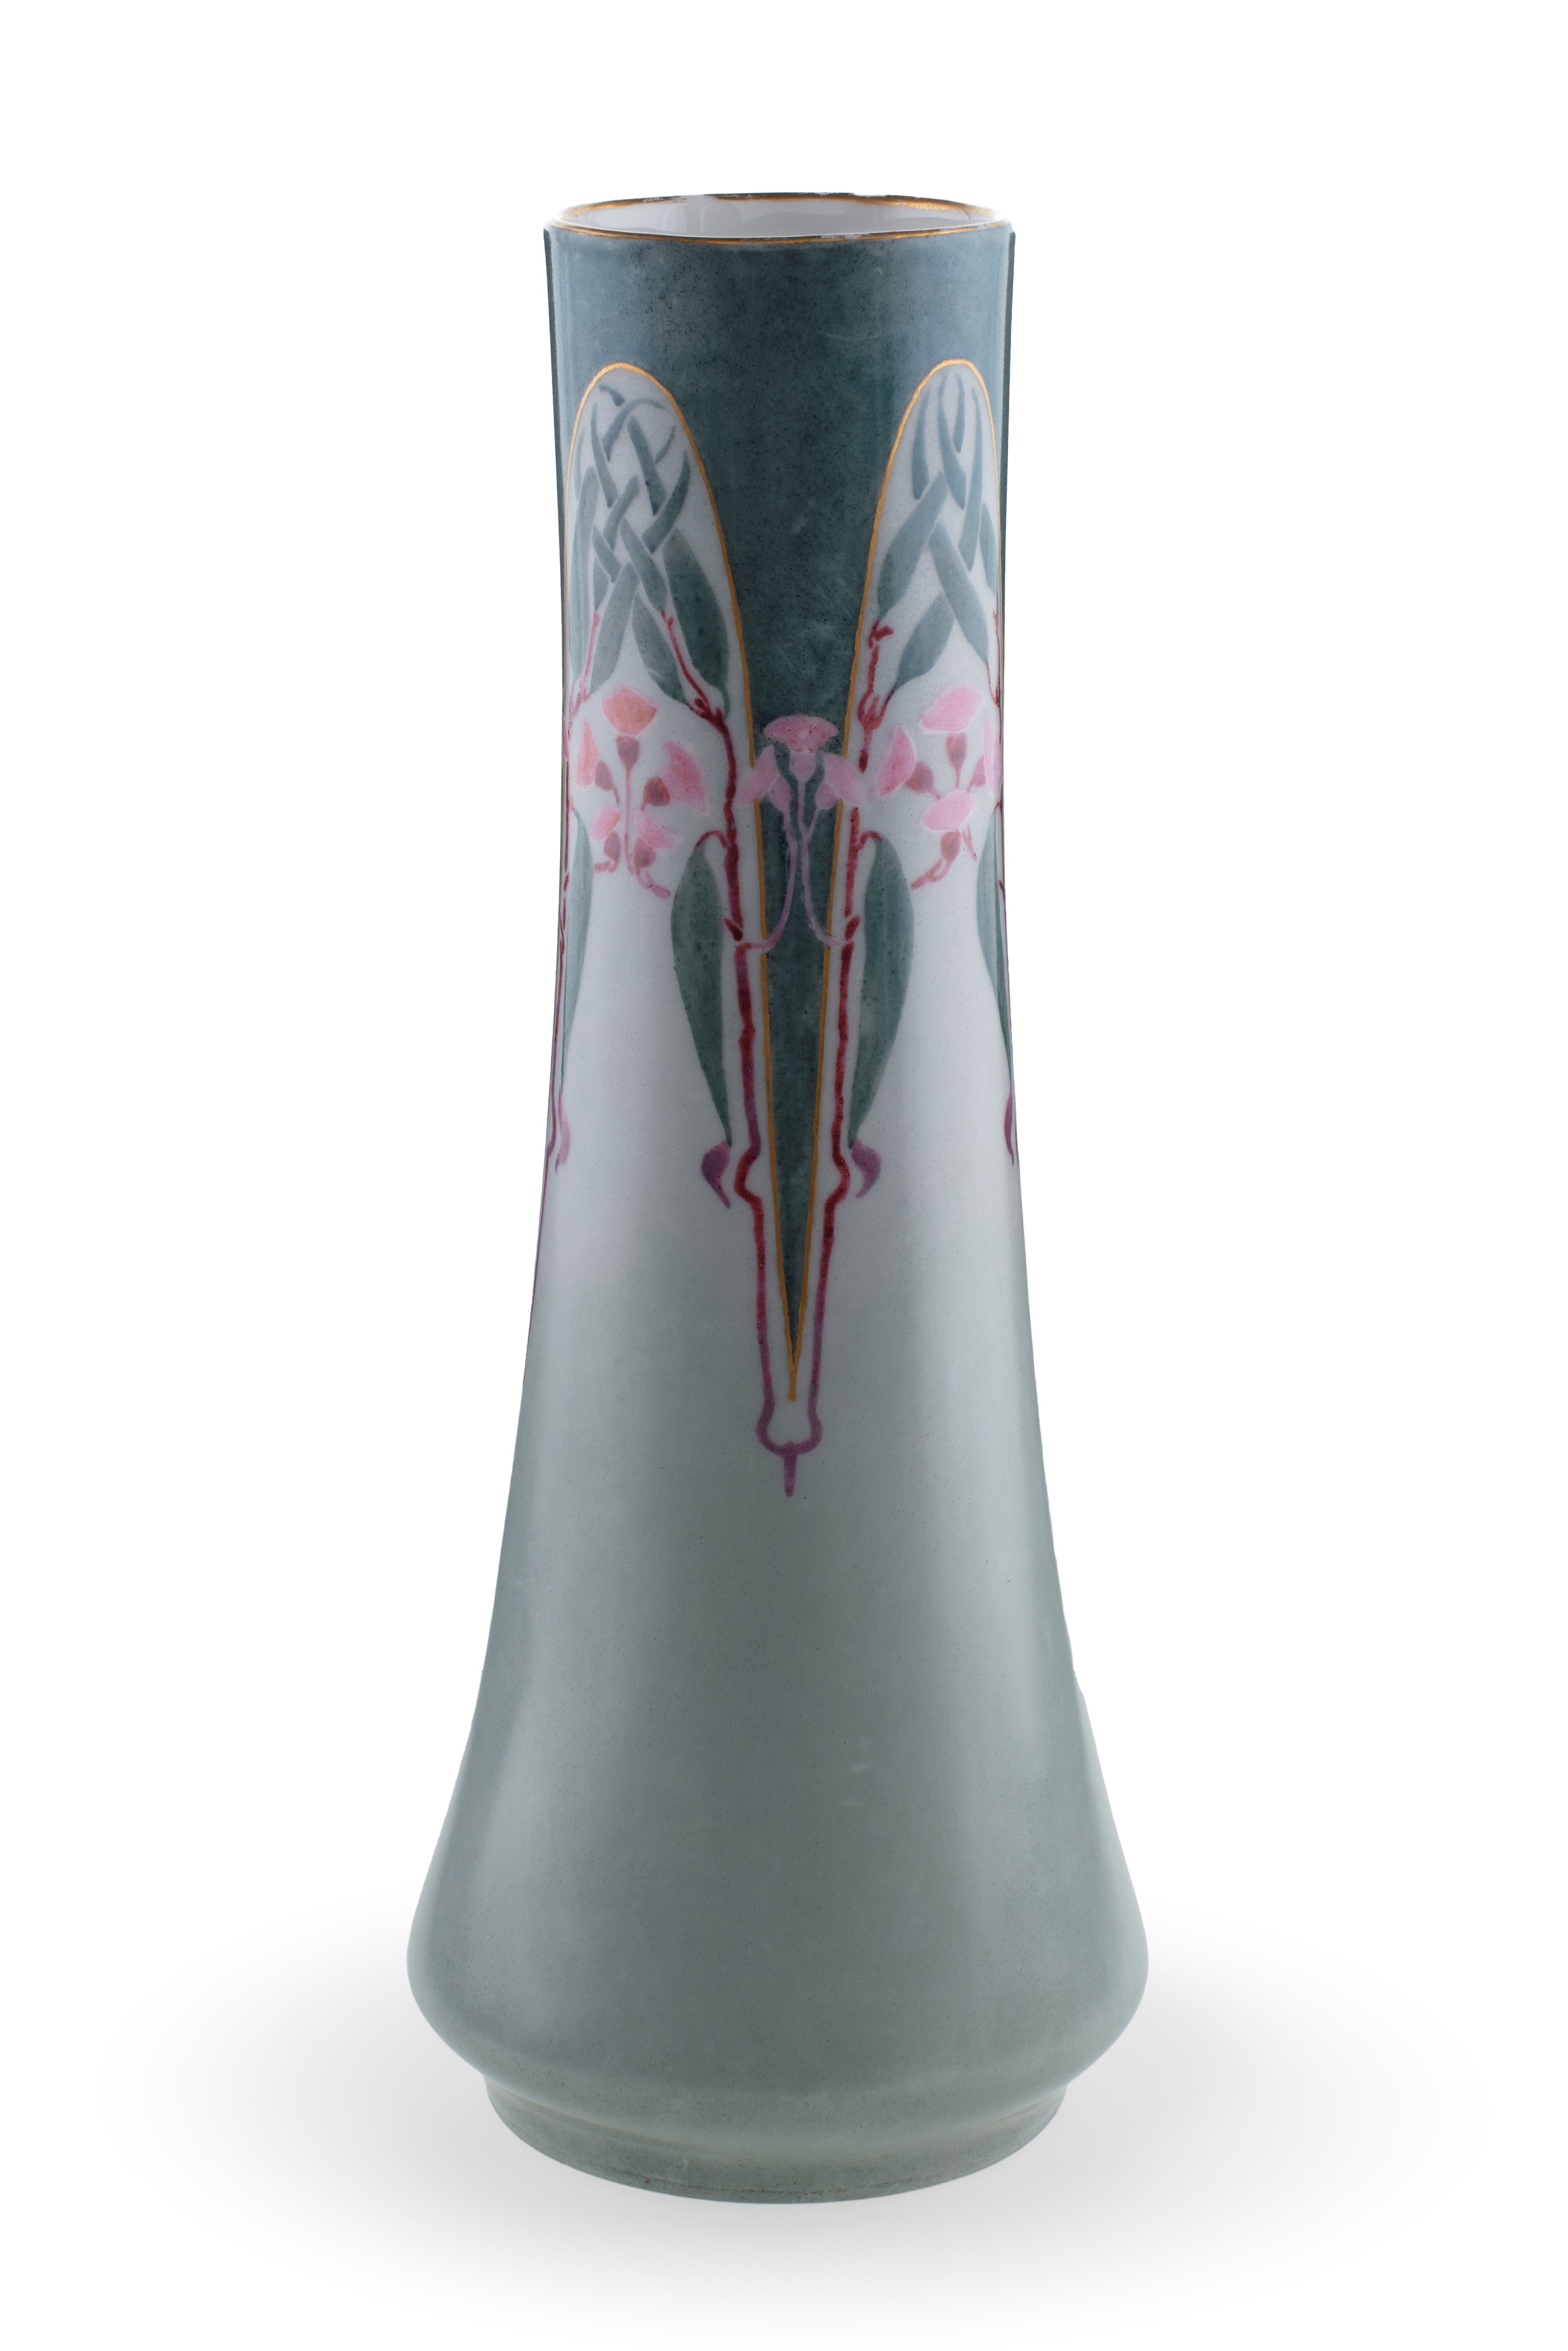 Vase handpainted by Laurence Hotham Howie